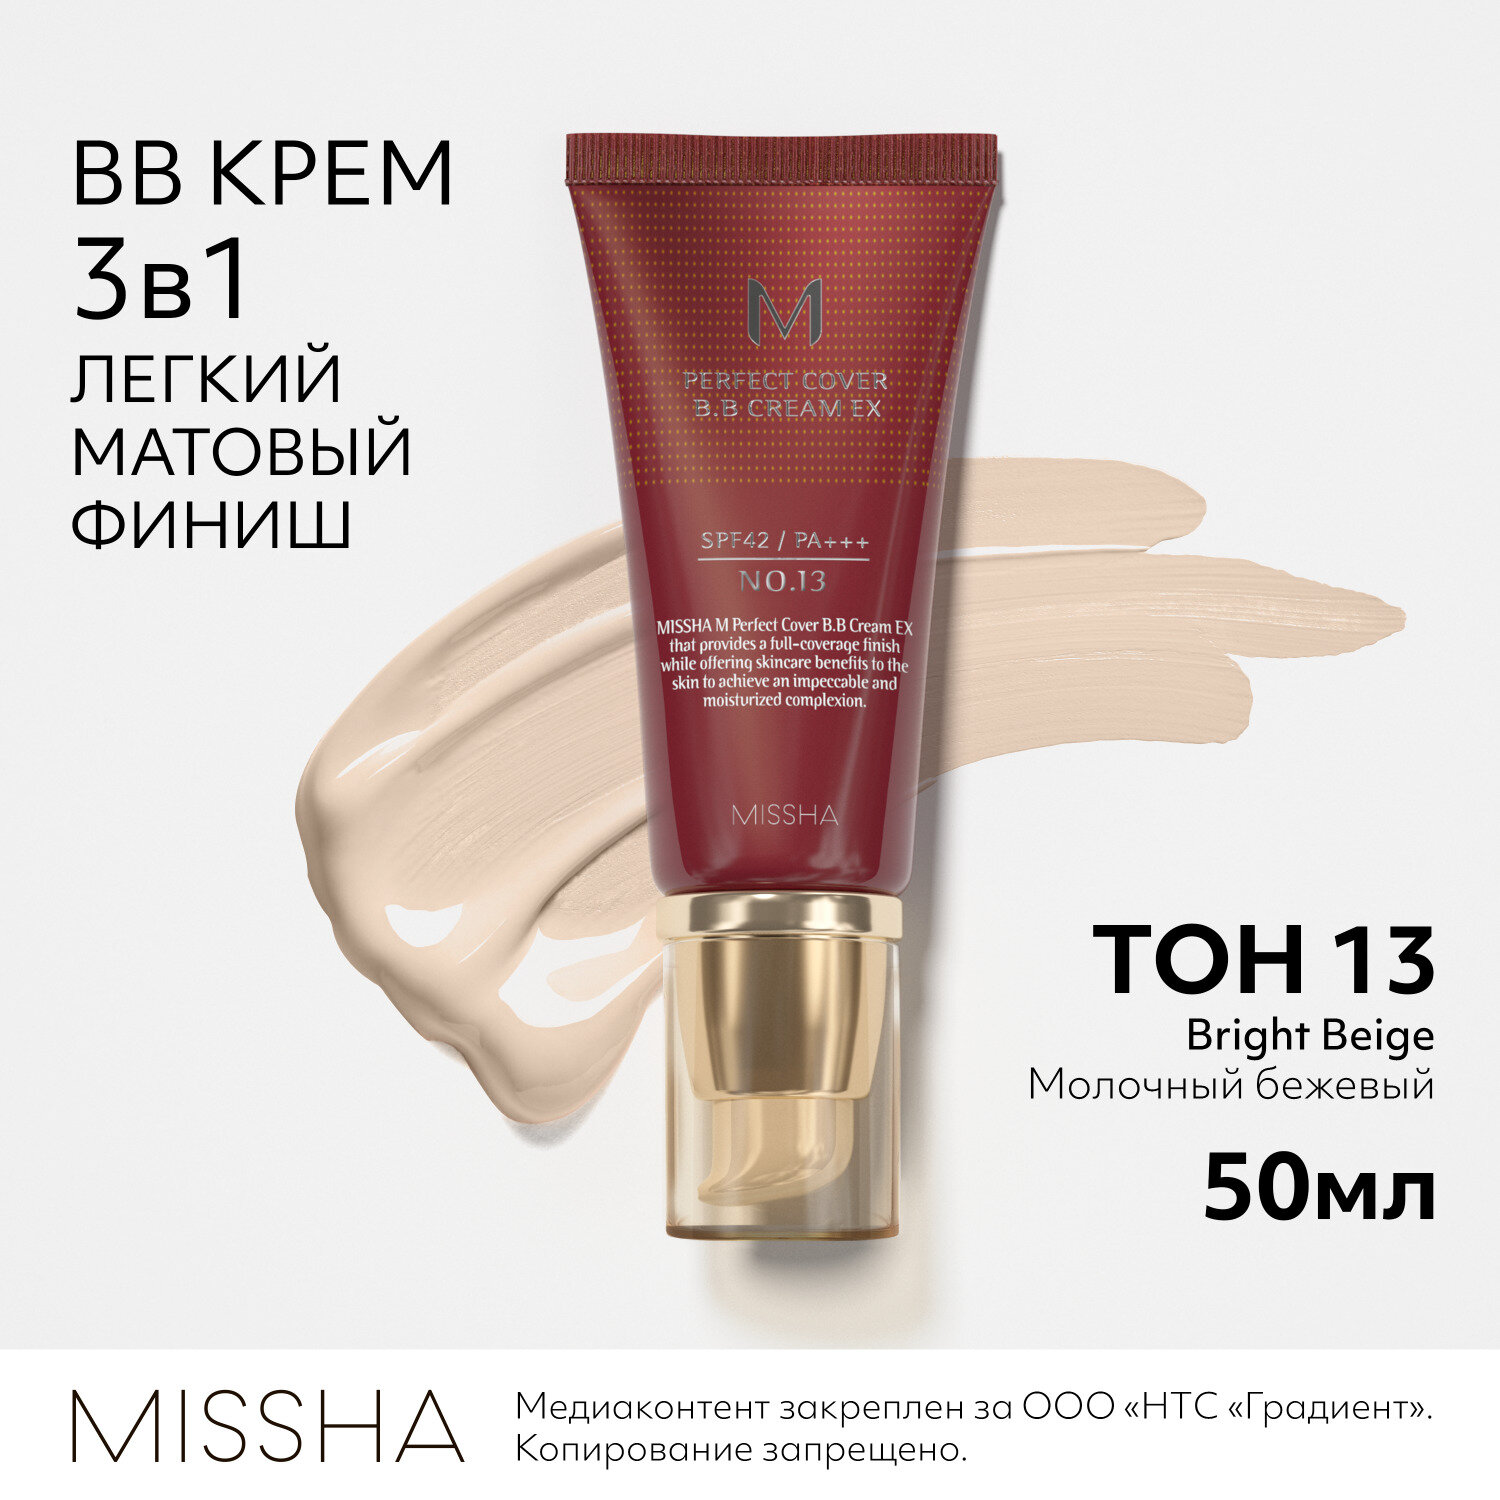 Missha BB крем Perfect Cover, SPF 42, 50 мл, оттенок: 13 bright beige